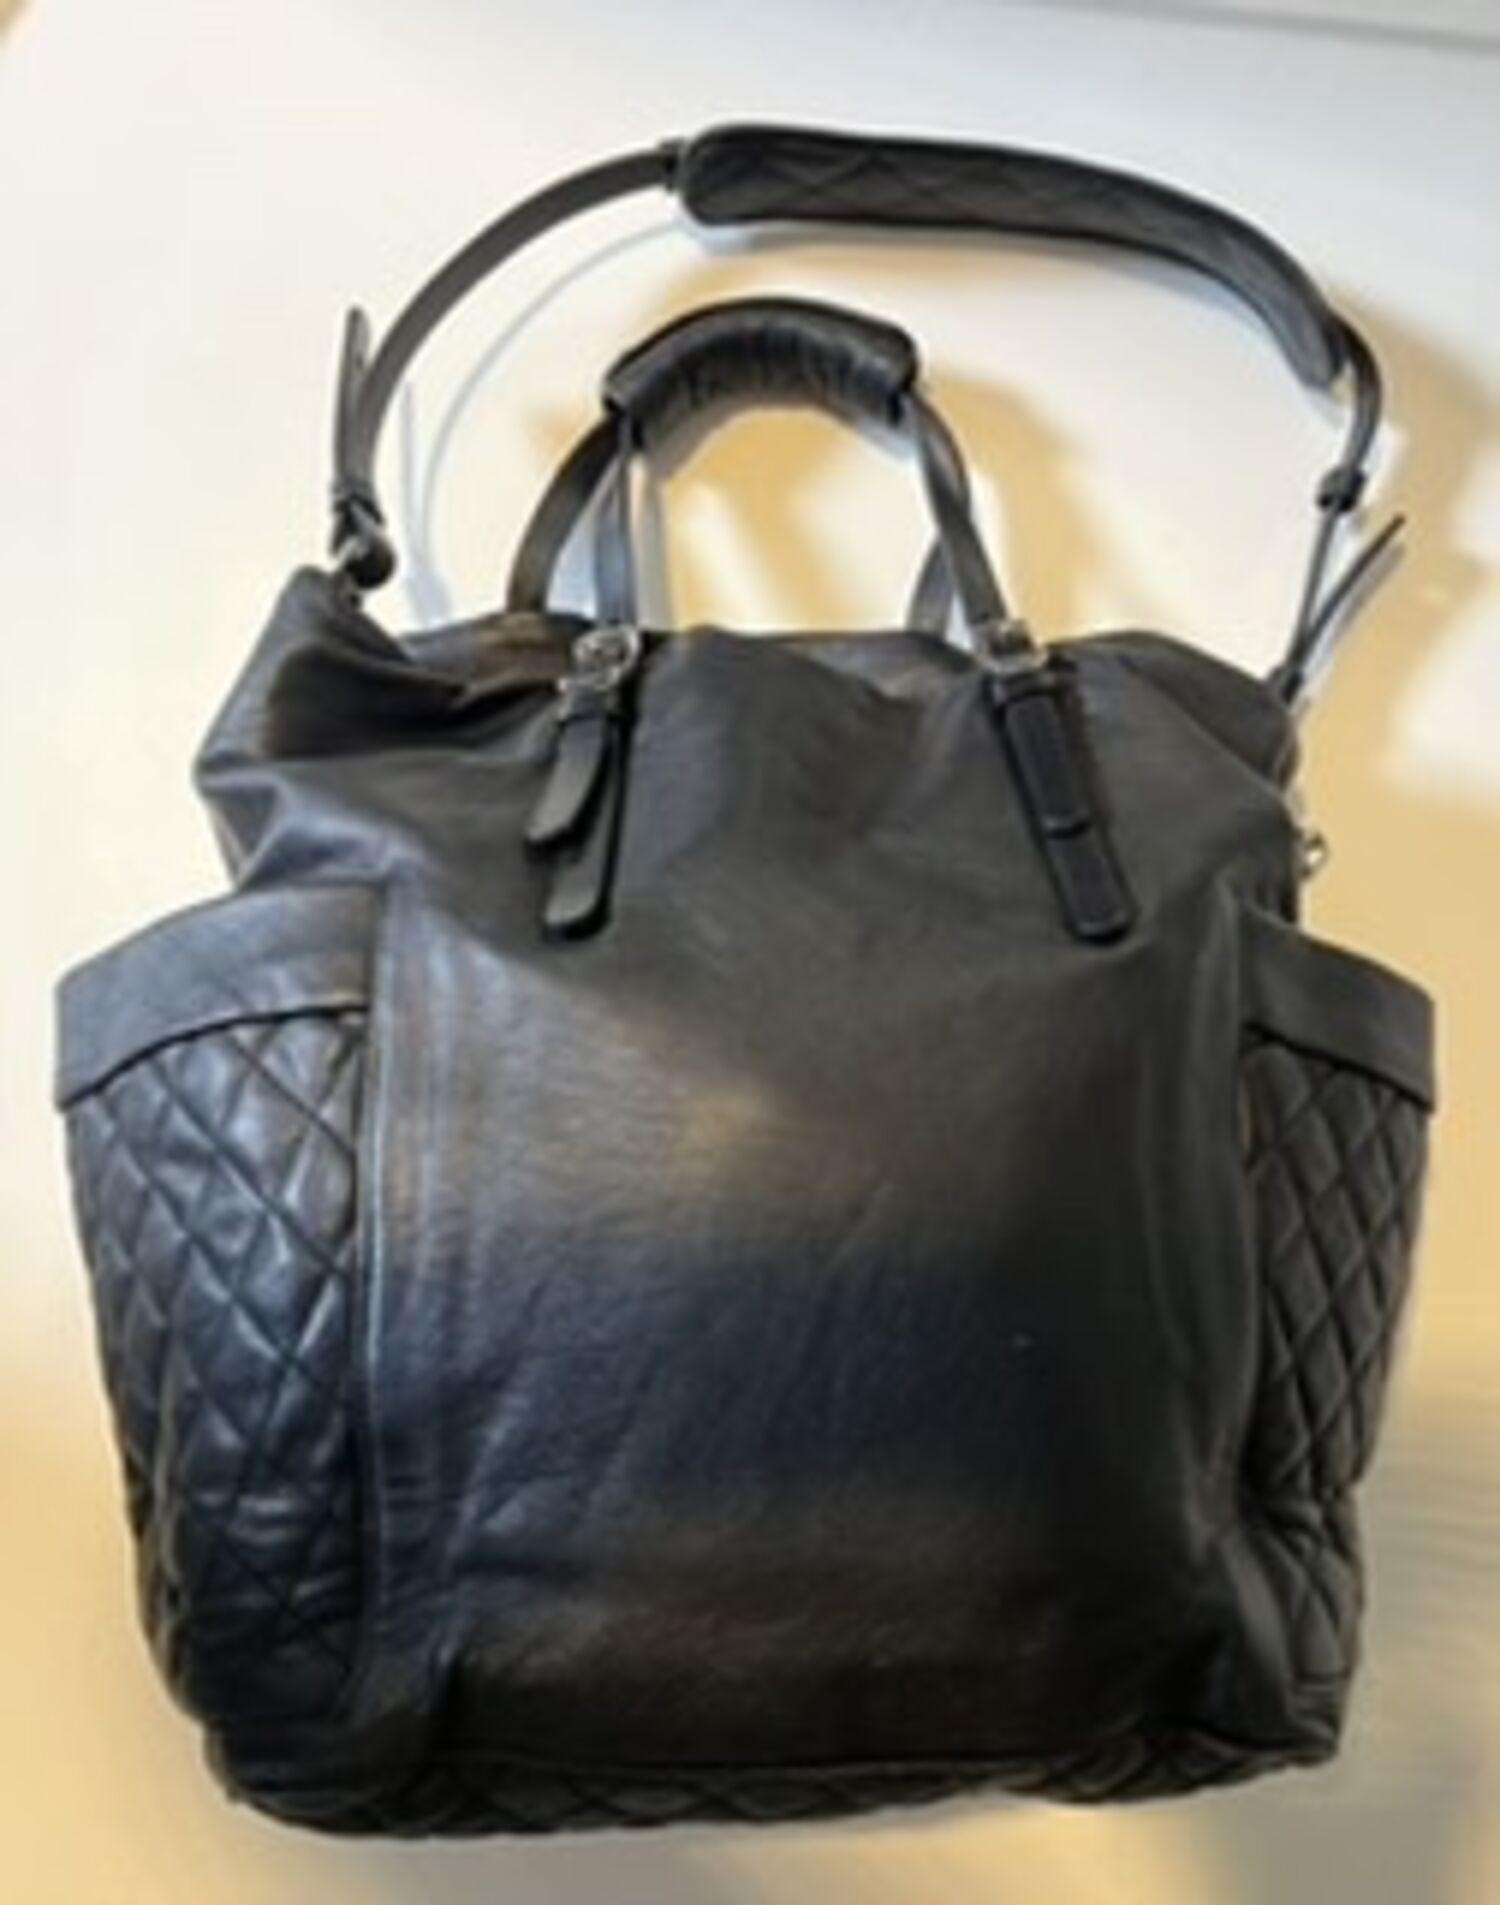 Leather Tote Handbag